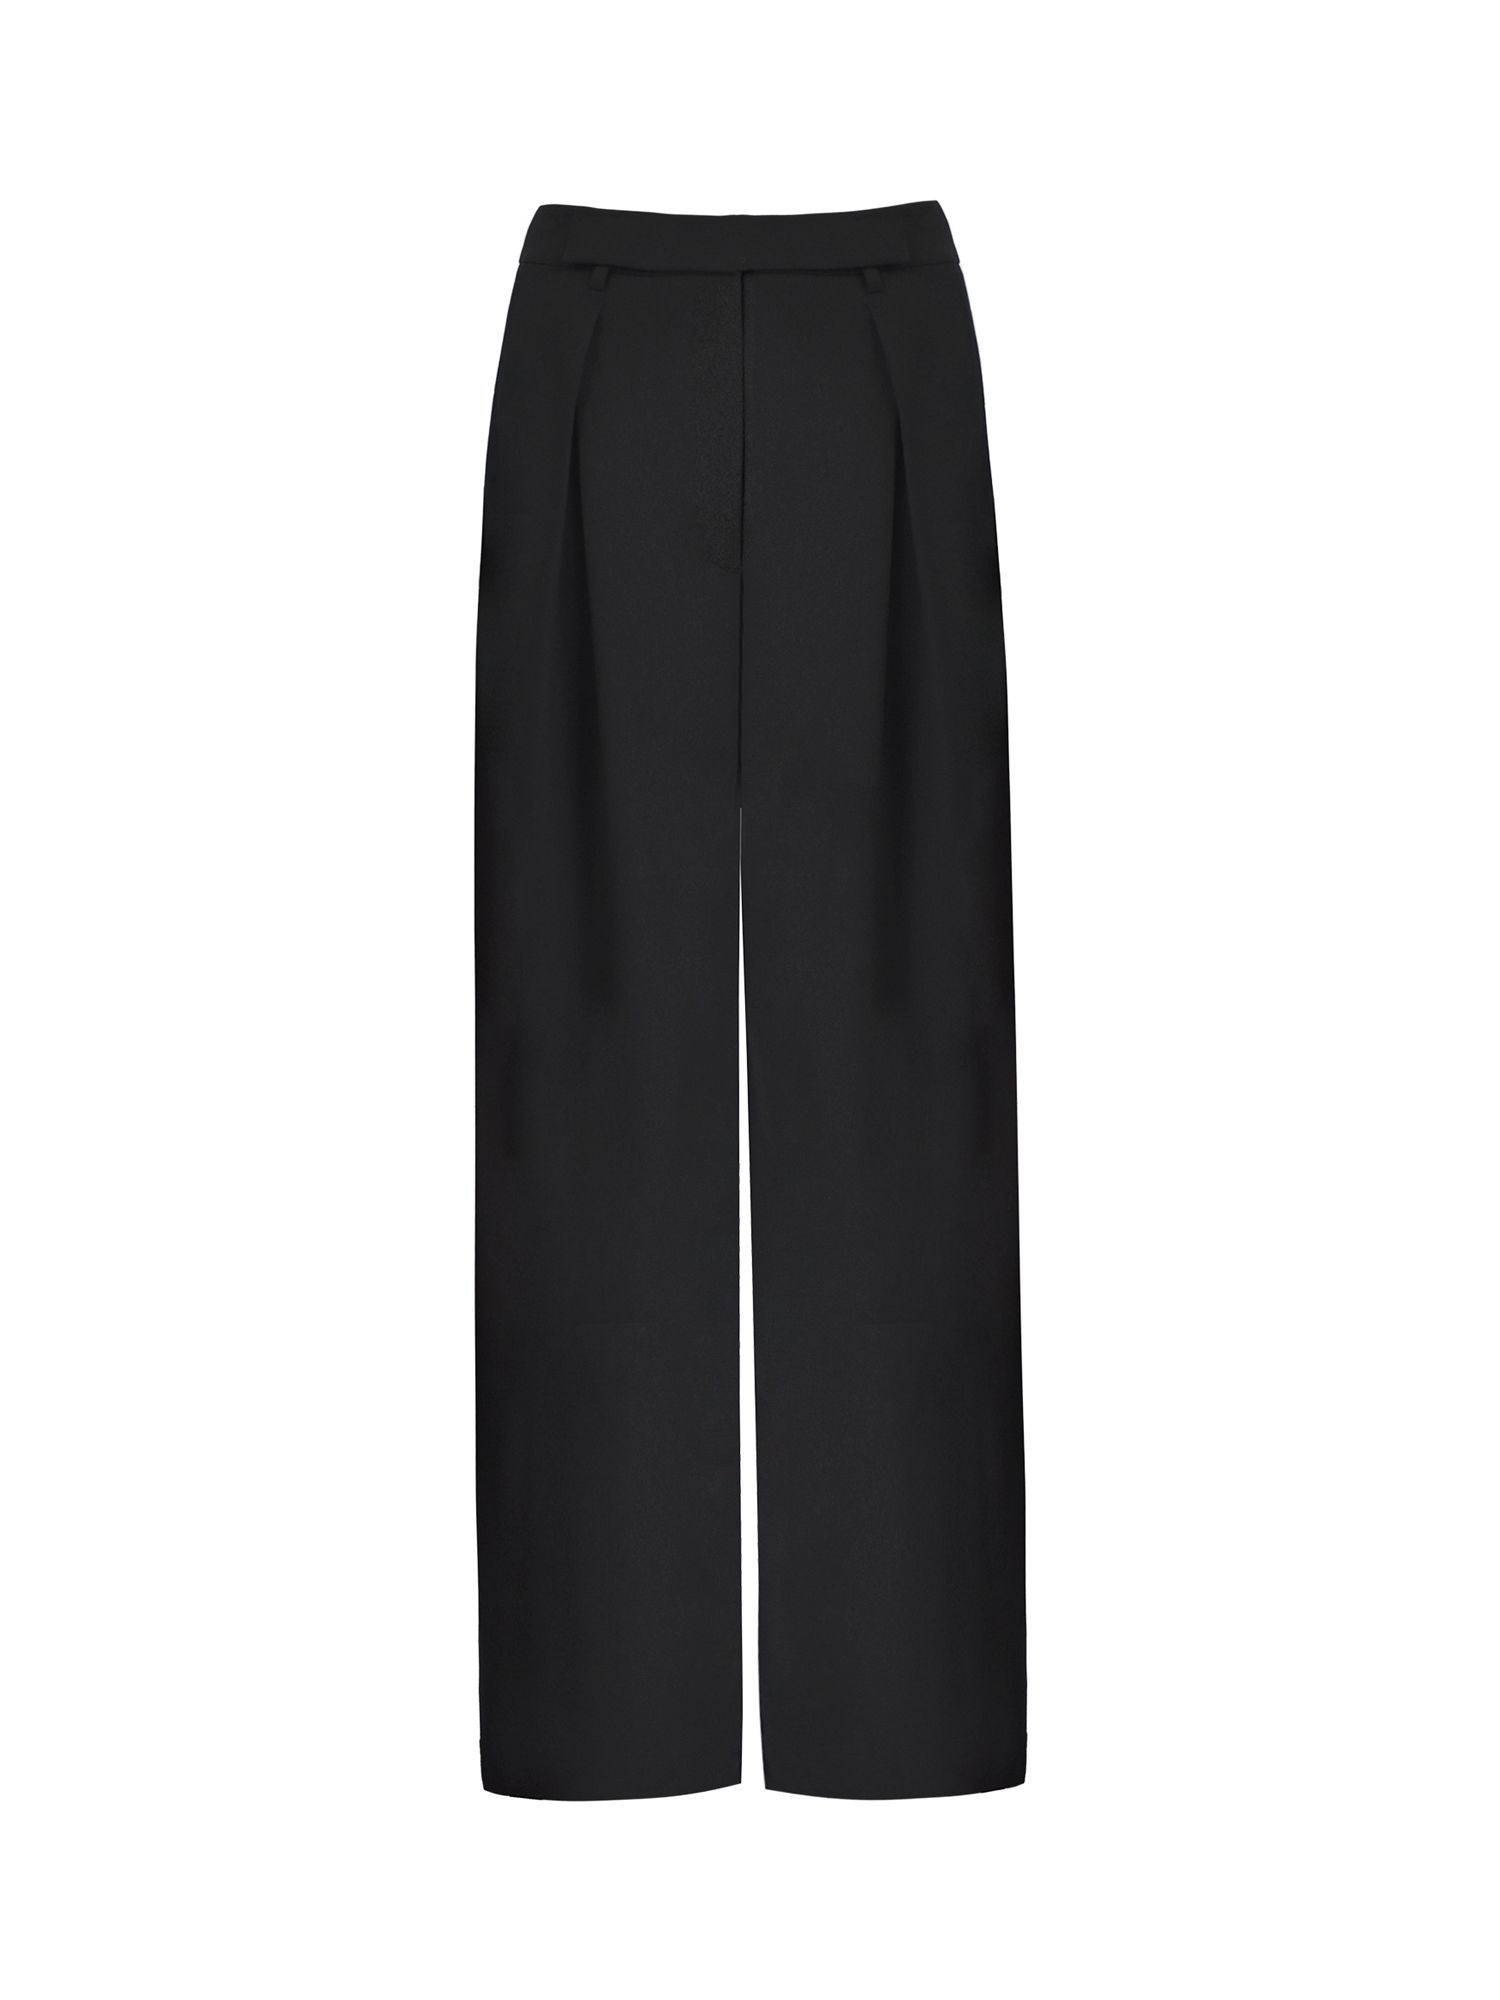 Ro&Zo Pleat Detail Trousers, Black at John Lewis & Partners